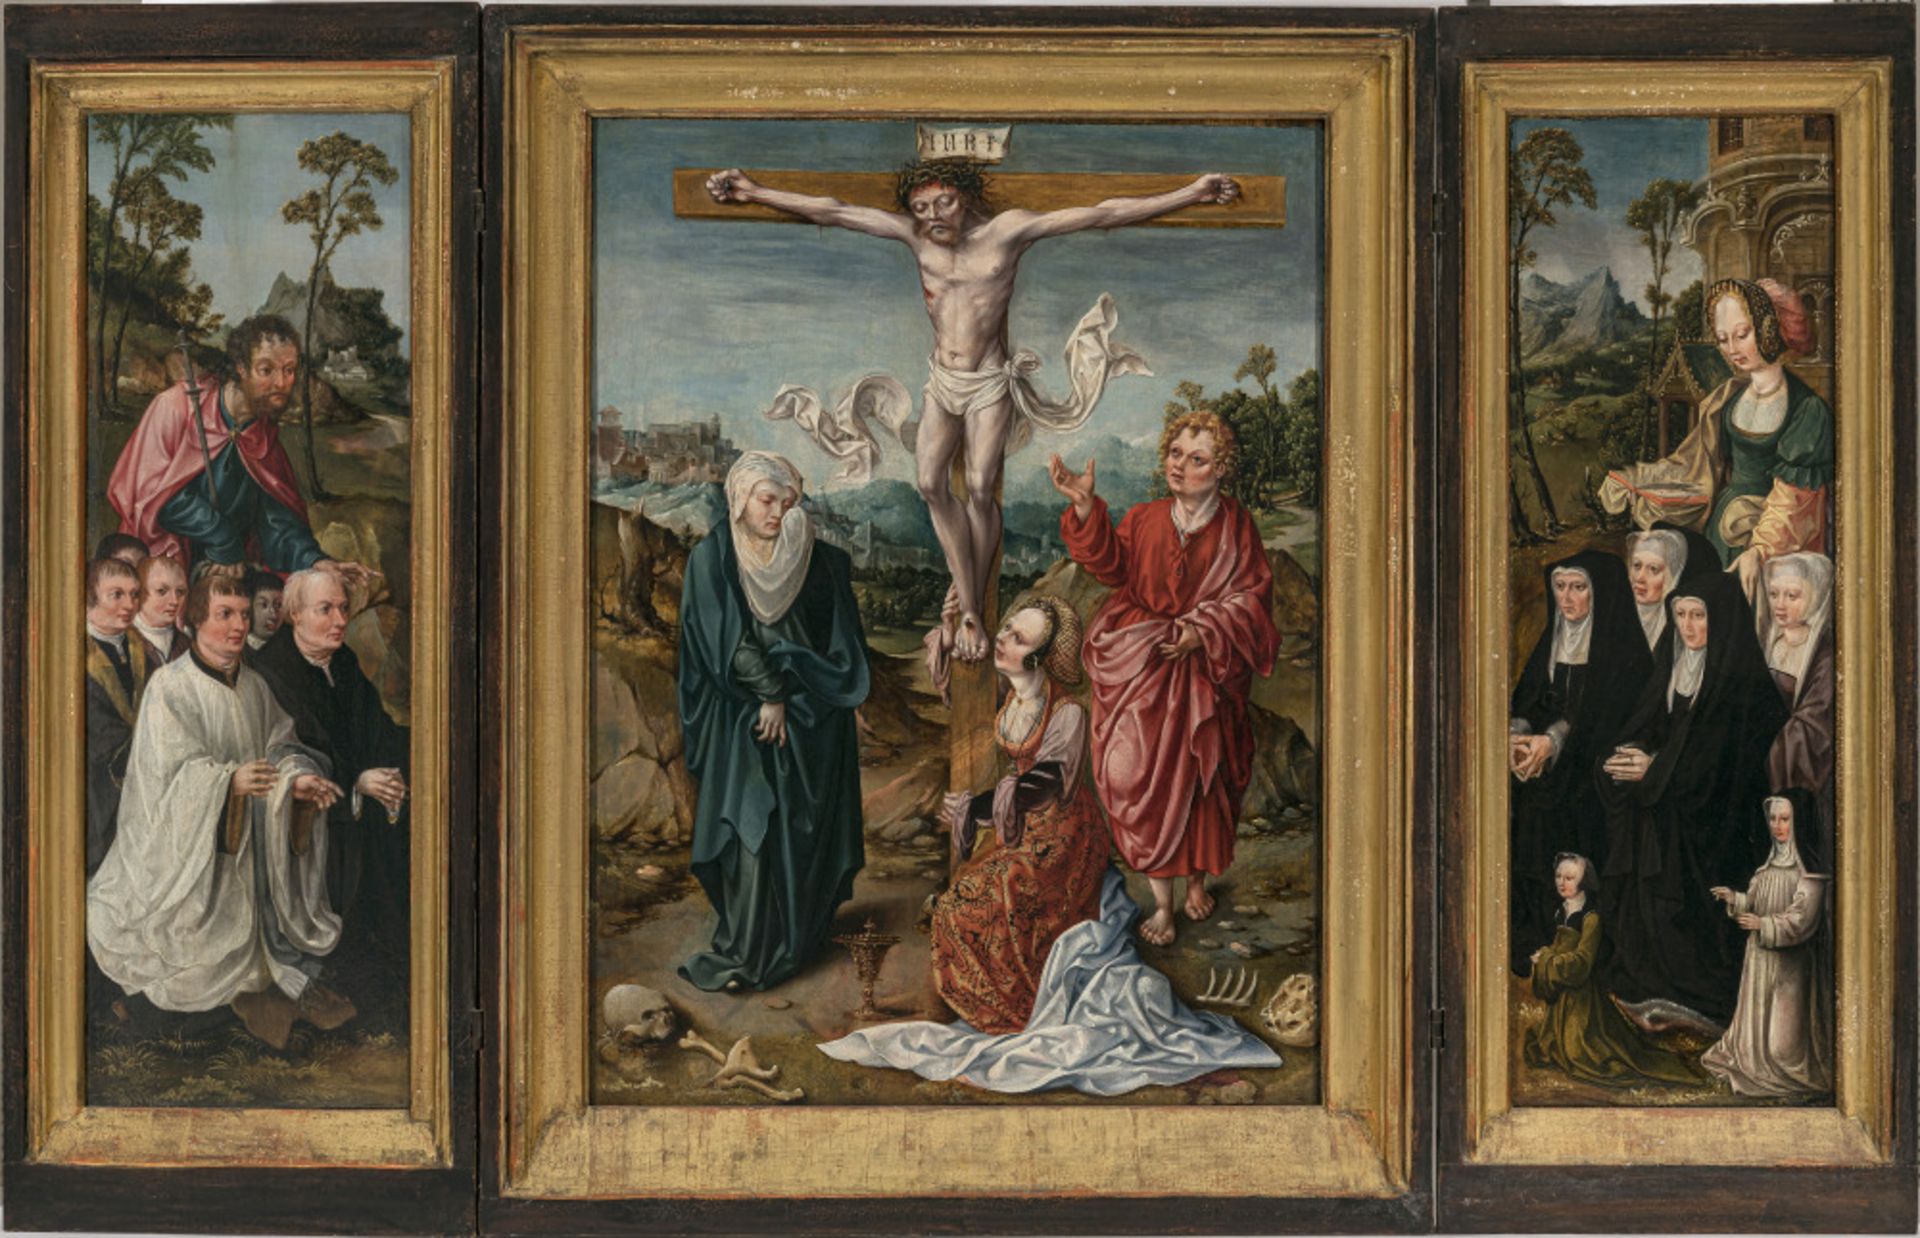 Flämisch (?) Circa 1520 - Triptych with the Crucifixion of Jesus